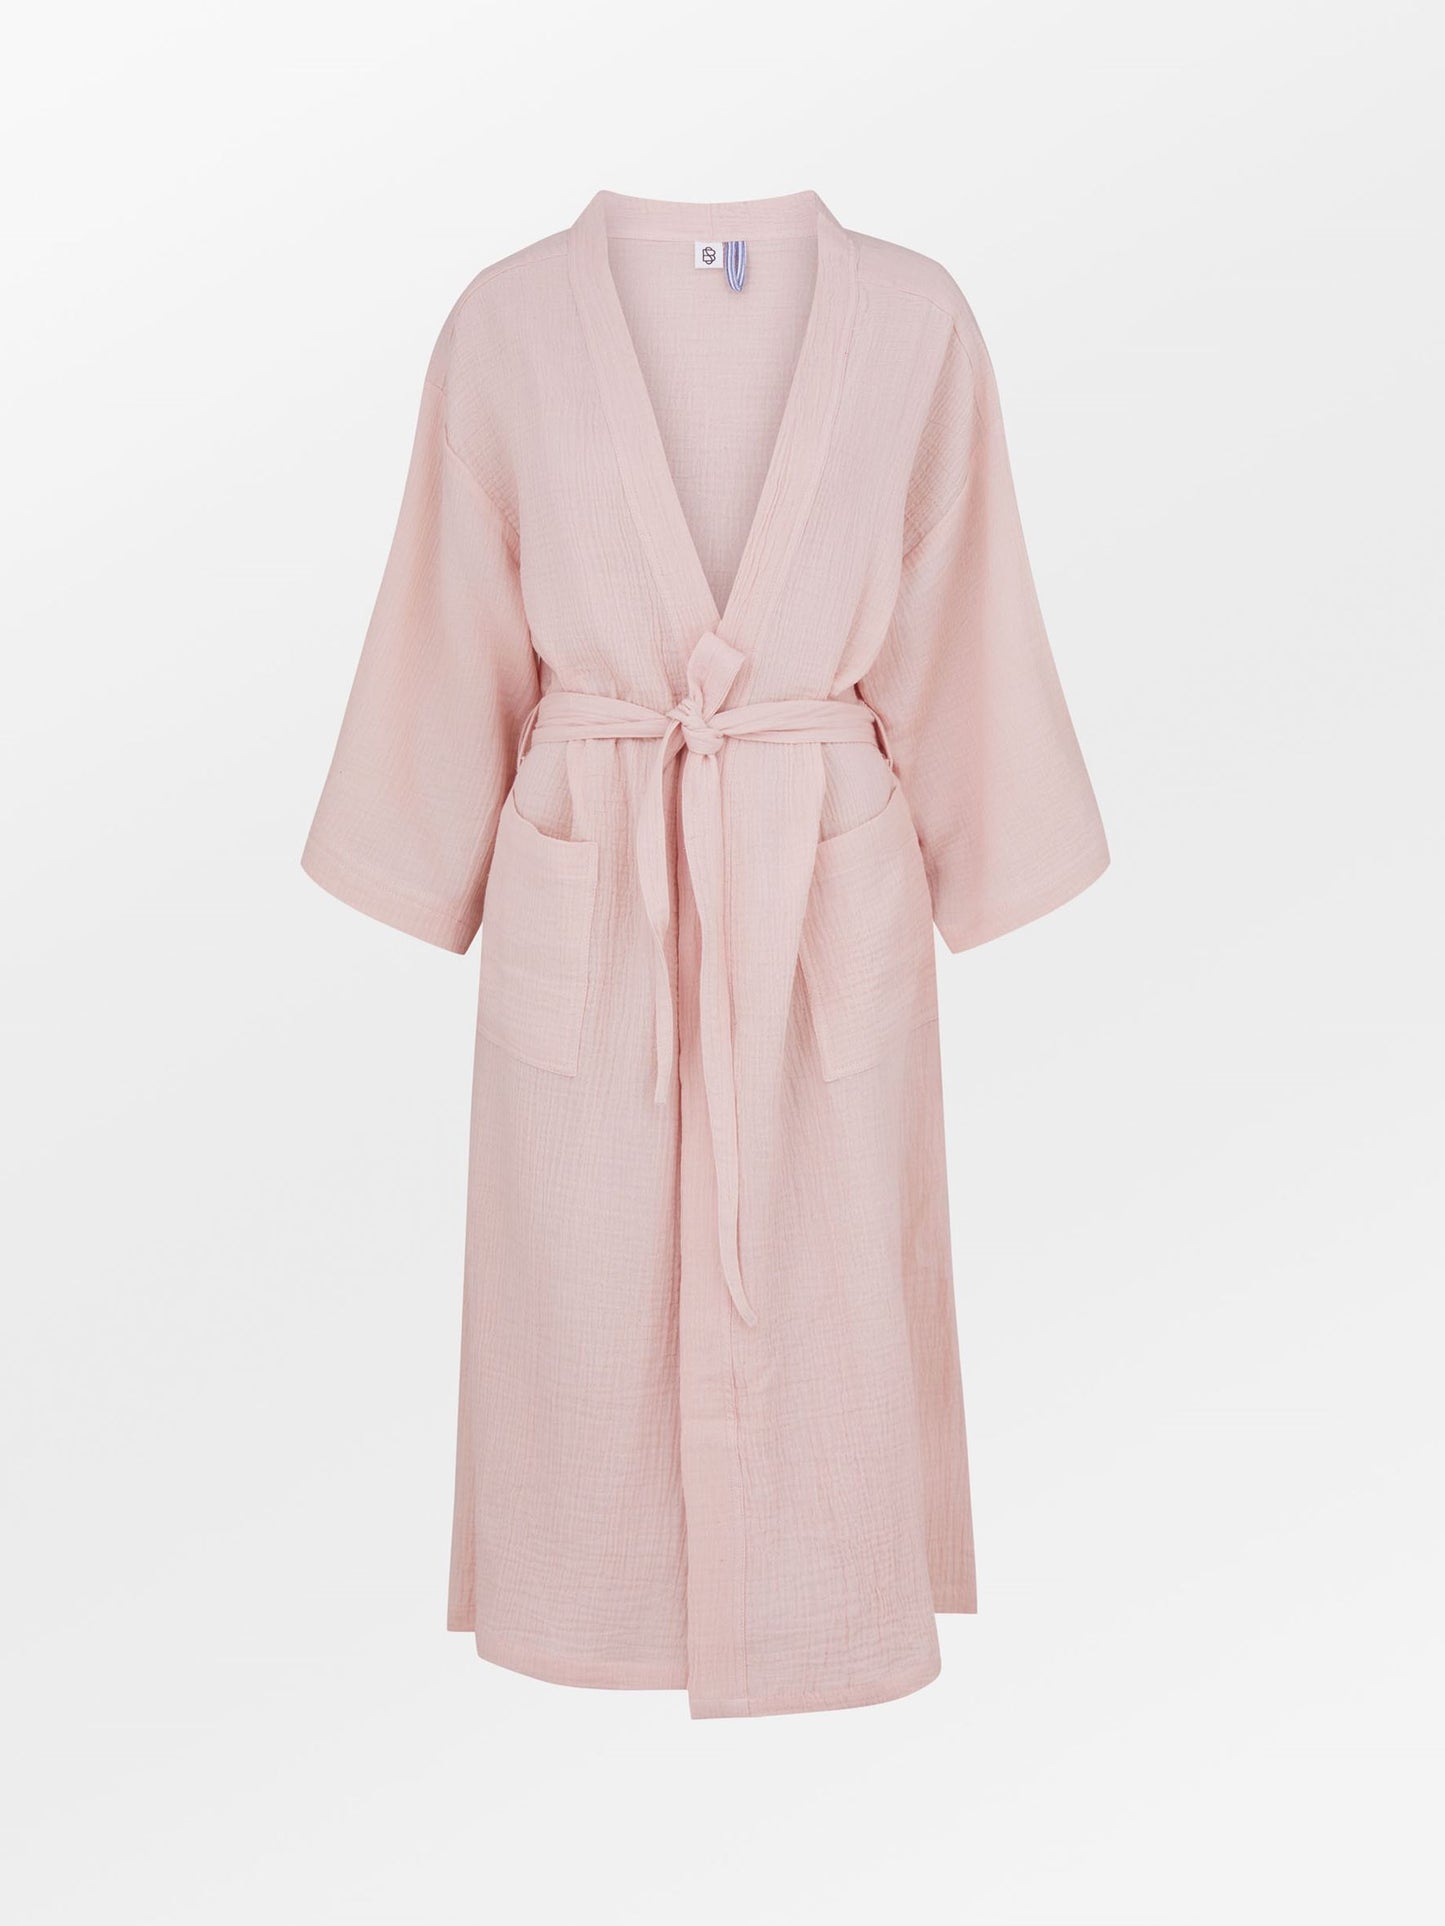 Becksöndergaard, Solid Gauze Luelle Kimono - Peach Whip Pink, homewear, homewear